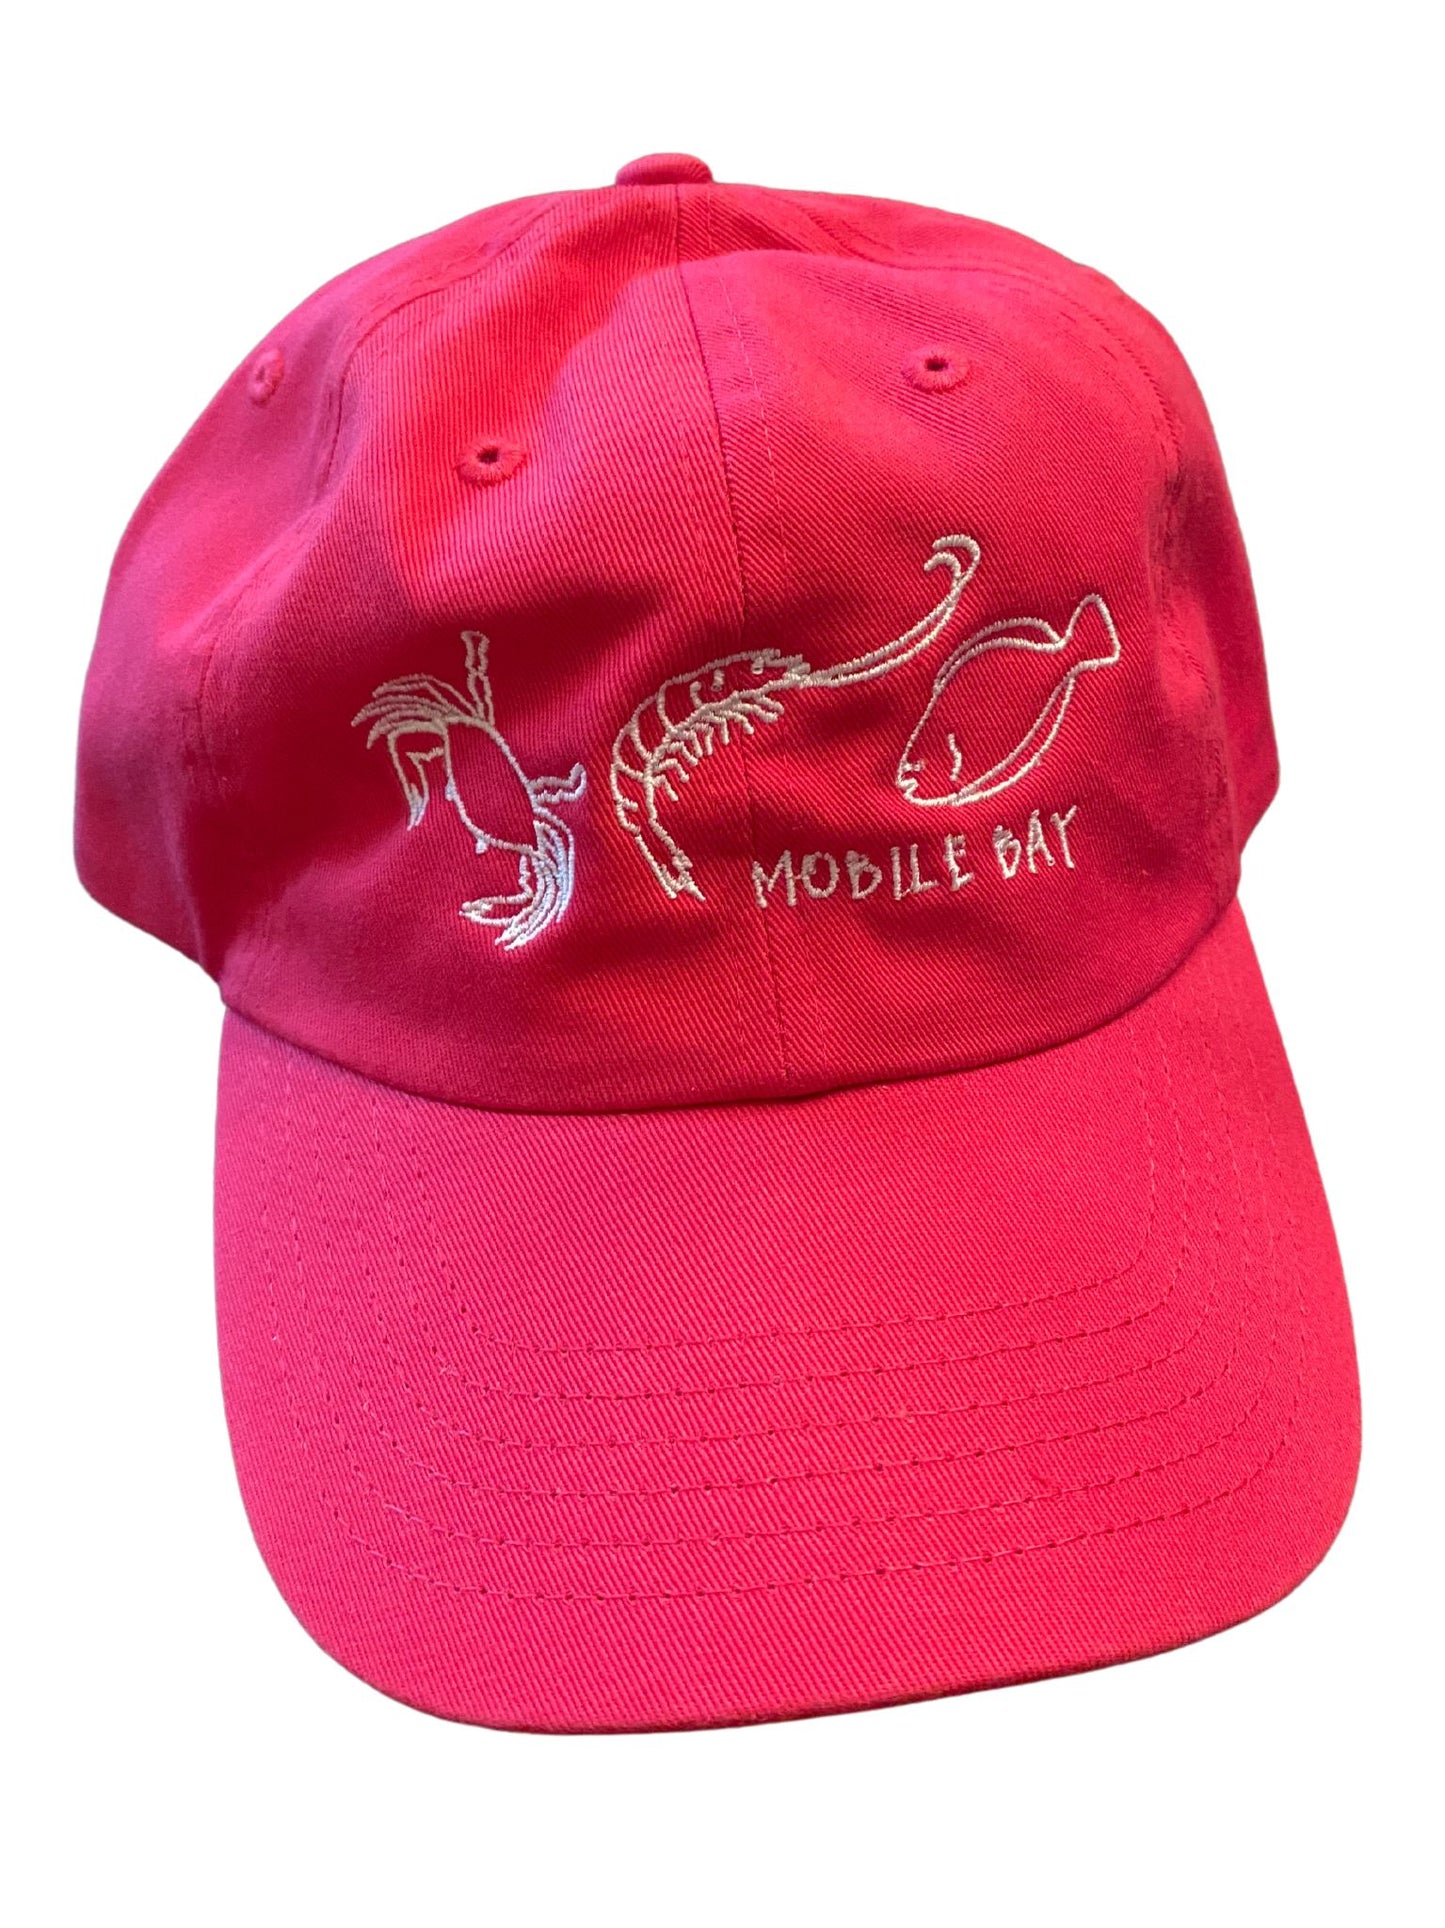 Mobile Bay Jubilee Hat- Pink